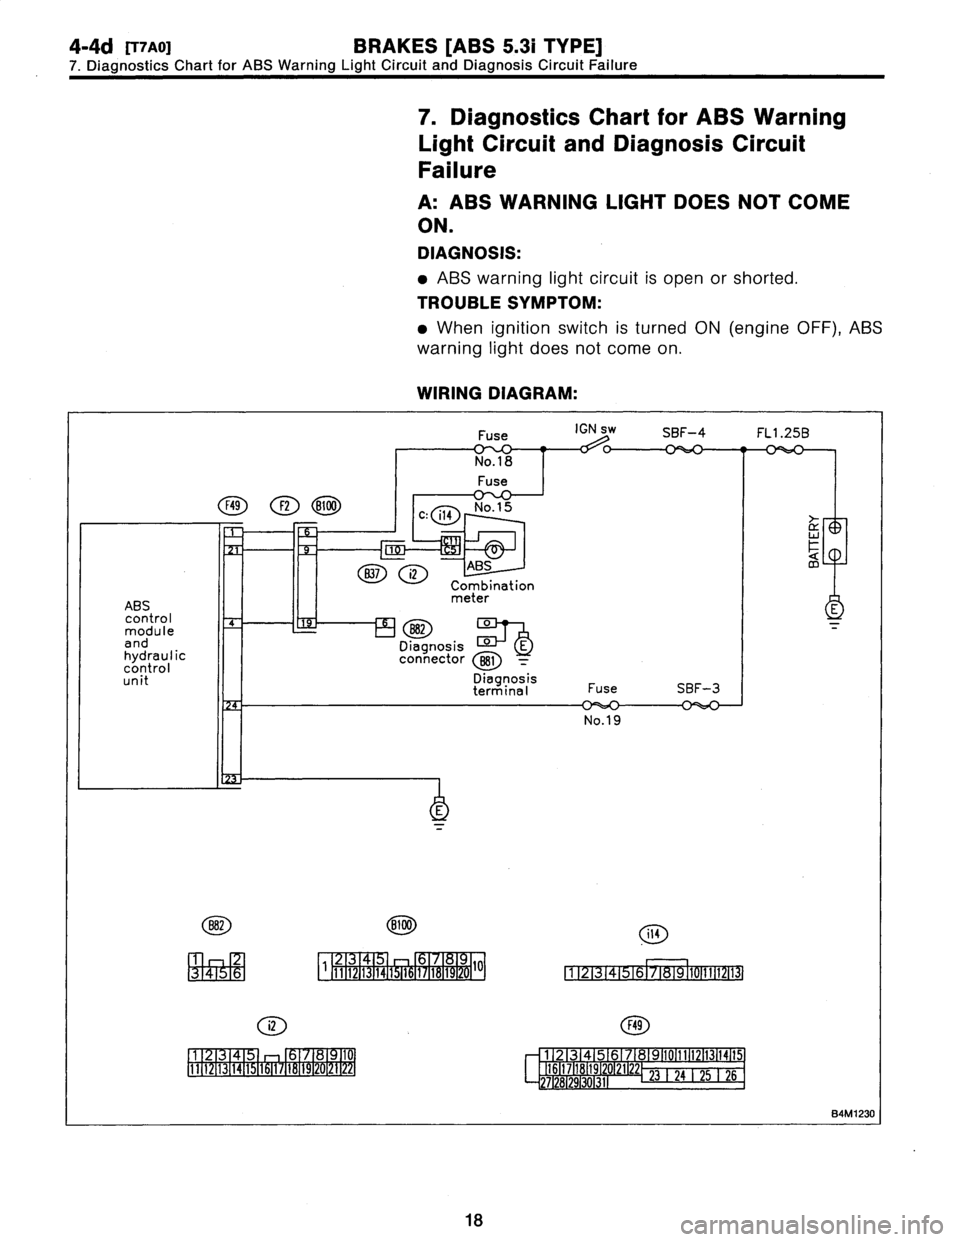 SUBARU LEGACY 1997  Service Repair Manual 
4-4d
R7ao1
BRAKES
[ABS
5
.3i
TYPE]

7
.
Diagnostics
Chart
for
ABS
Warning
Light
Circuit
and
Diagnosis
Circuit
Failure

7
.
Diagnostics
Chart
for
ABS
Warning

Light
Circuit
and
Diagnosis
Circuit

Fail